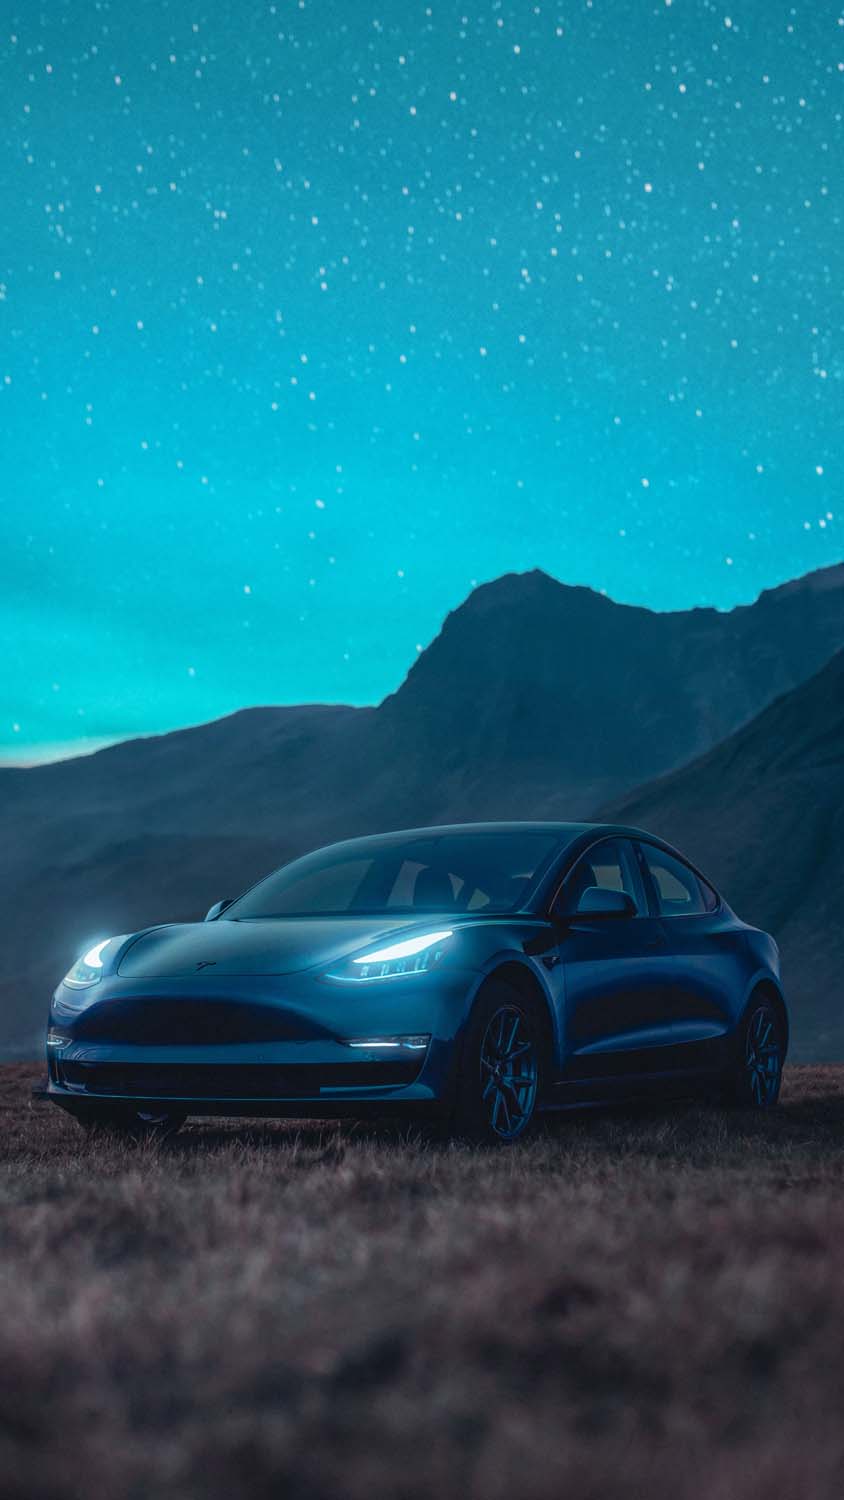 Tesla Car iPhone Wallpaper HD